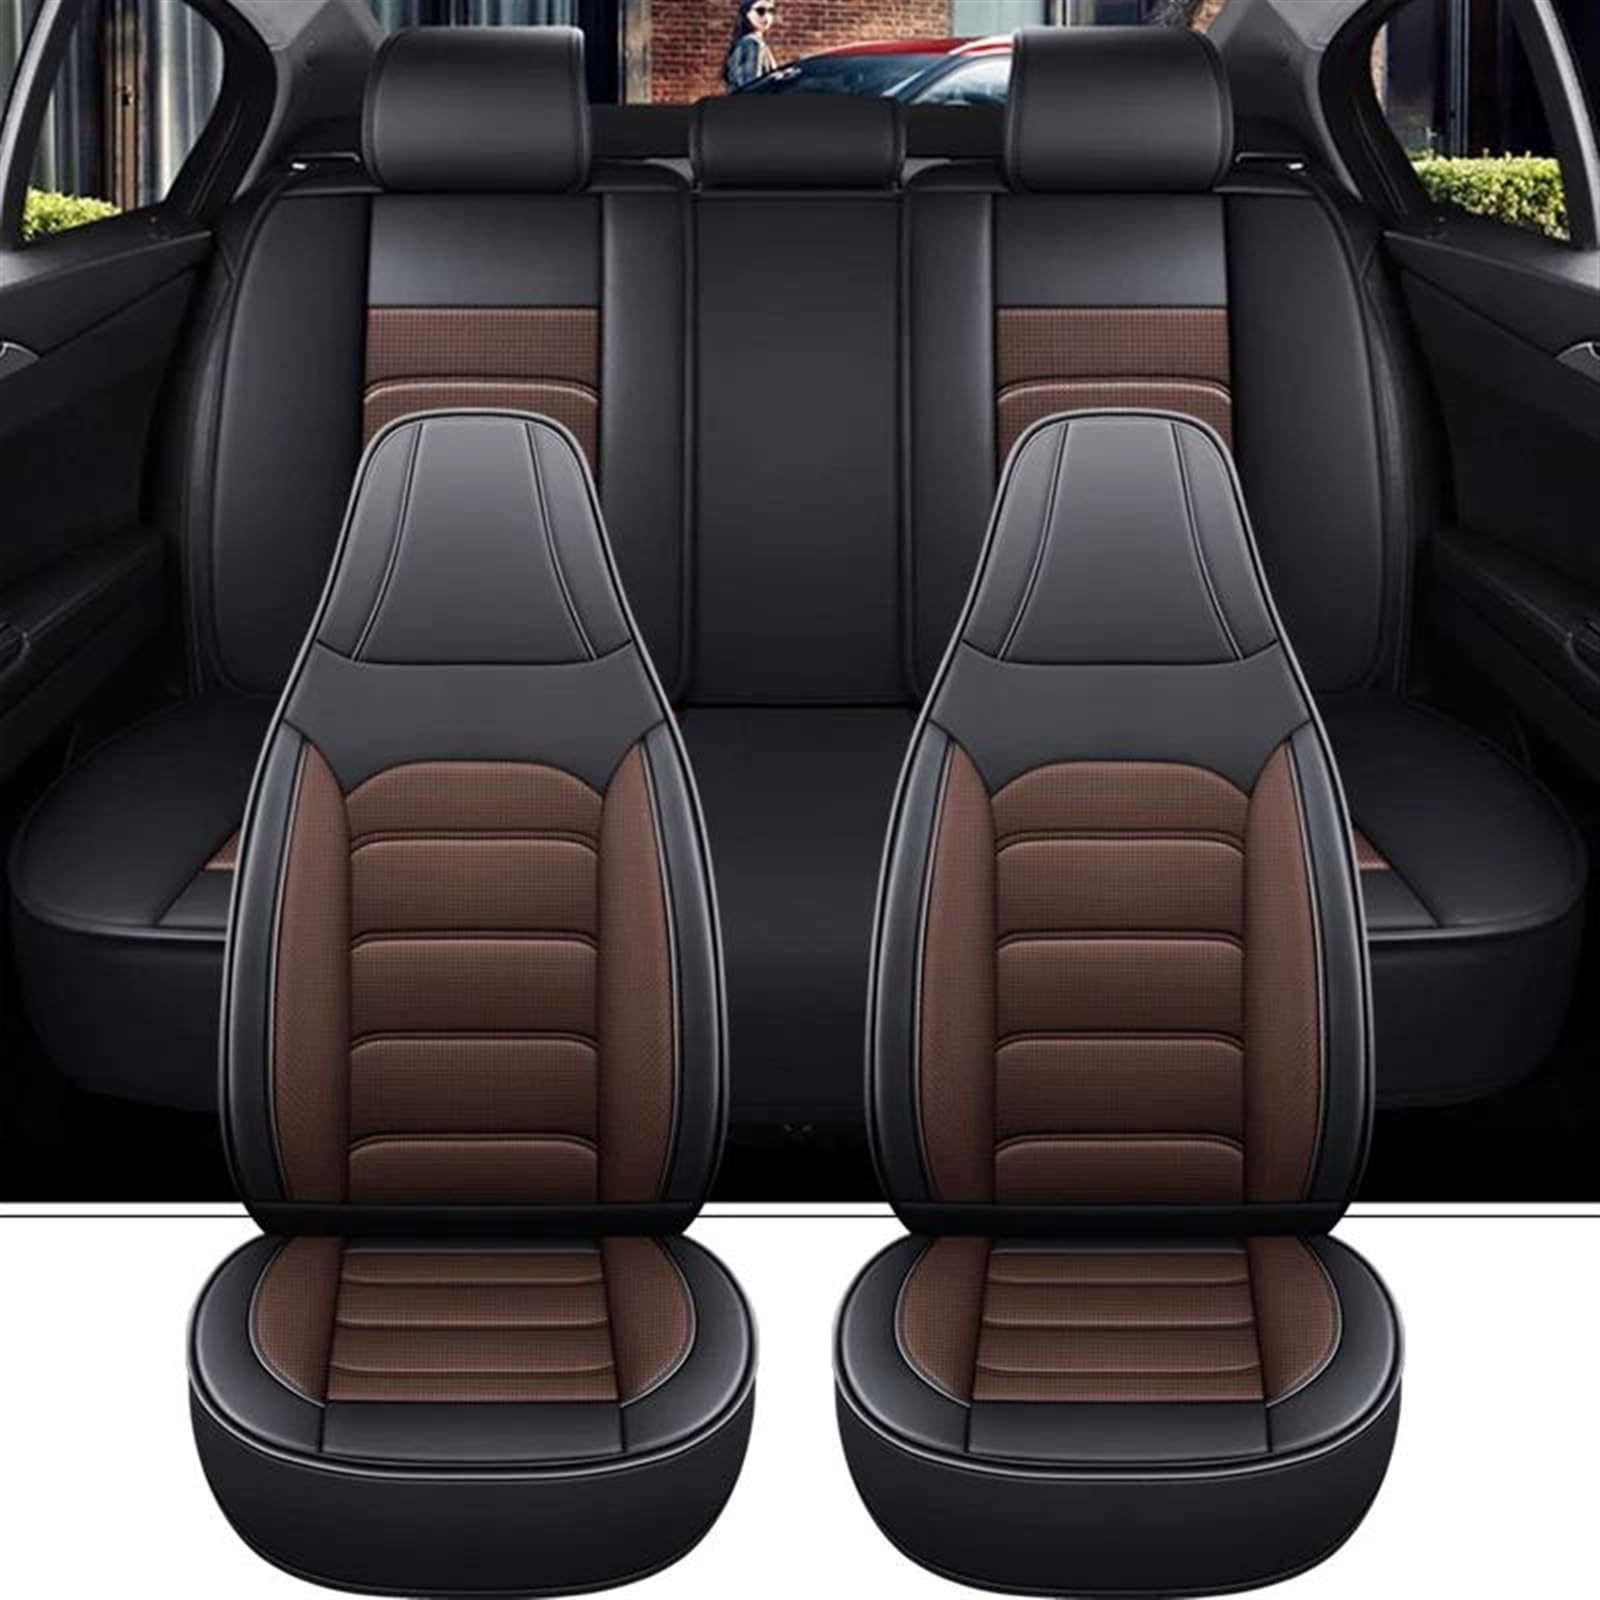 Autositzschoner Universal-Leder-Autositzbezug Für E60 F30 E46 E36 E39 E30 Für A4 B8 Für Golf Für MK4 5 7 Auto-Sitzbezug(Black coffee 2) von ESPYN